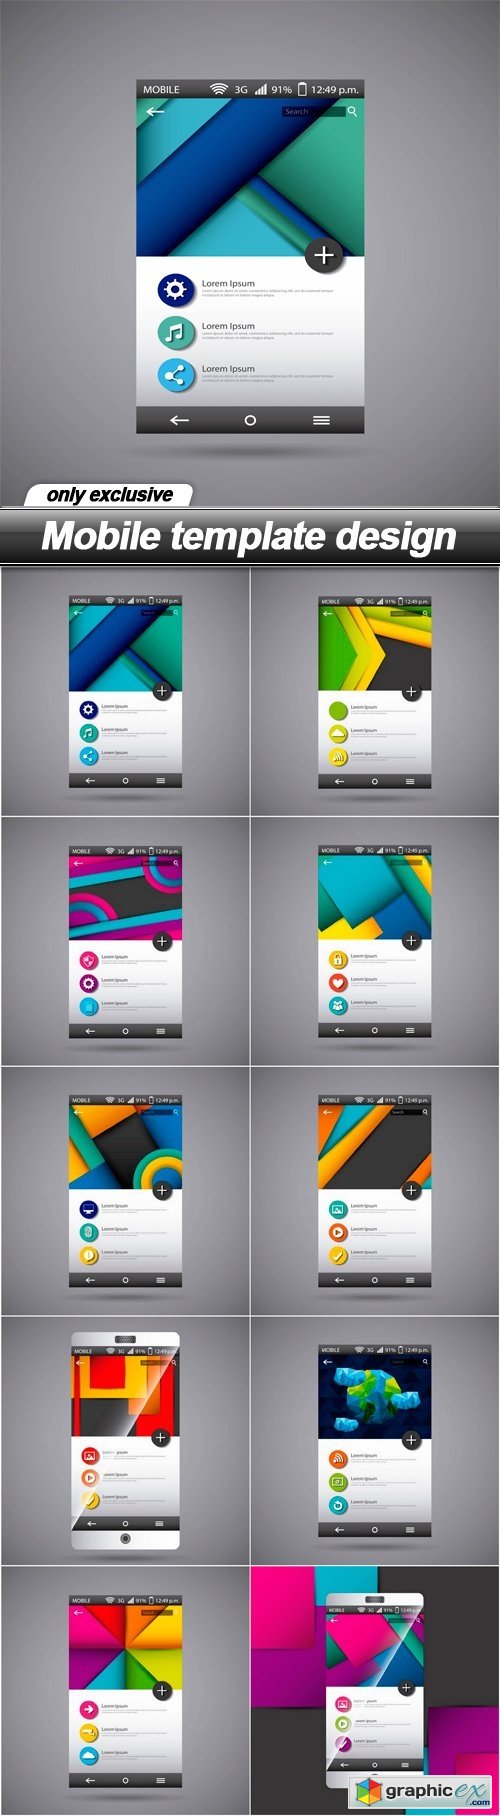 Mobile template design - 10 EPS